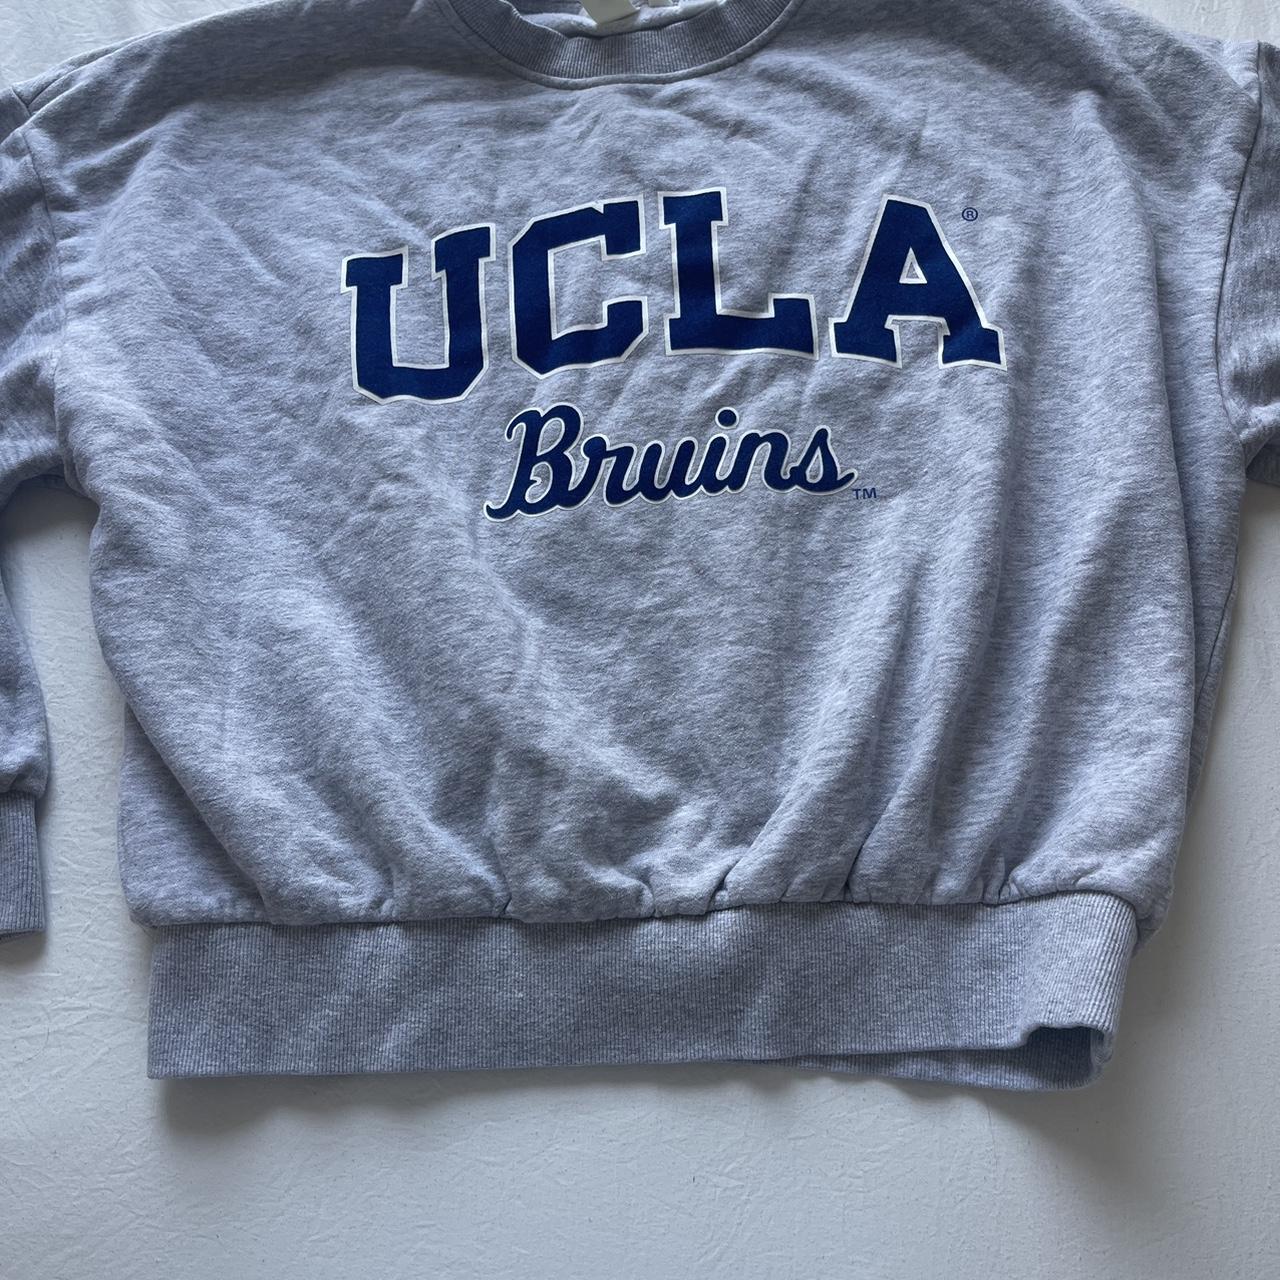 H&M UCLA Bruins NCAA College Crest White Sweater Sweatshirt